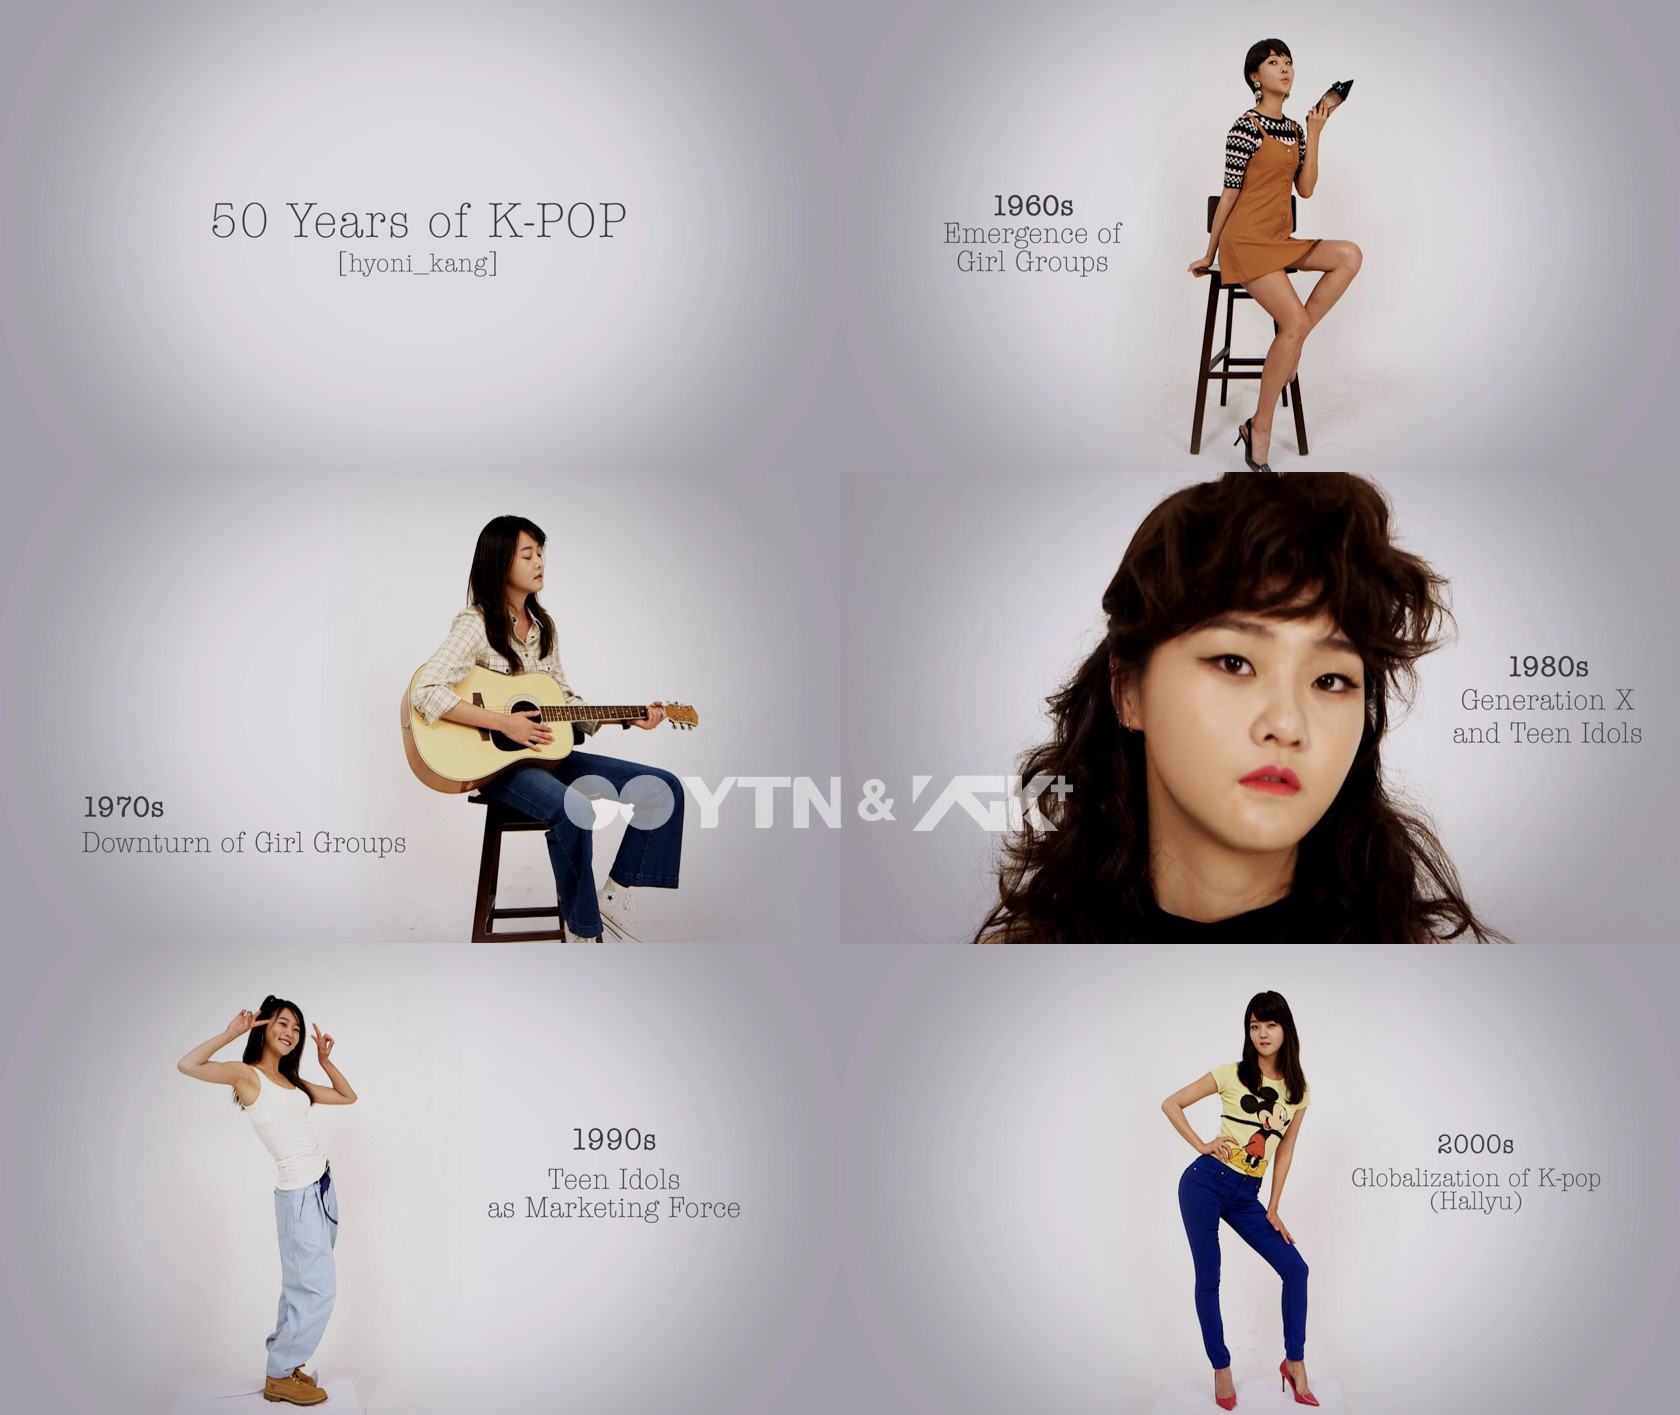 YGK+TV 제작! 강승현이 보여주는 K-POP 아이돌 패션의 50년 역사!